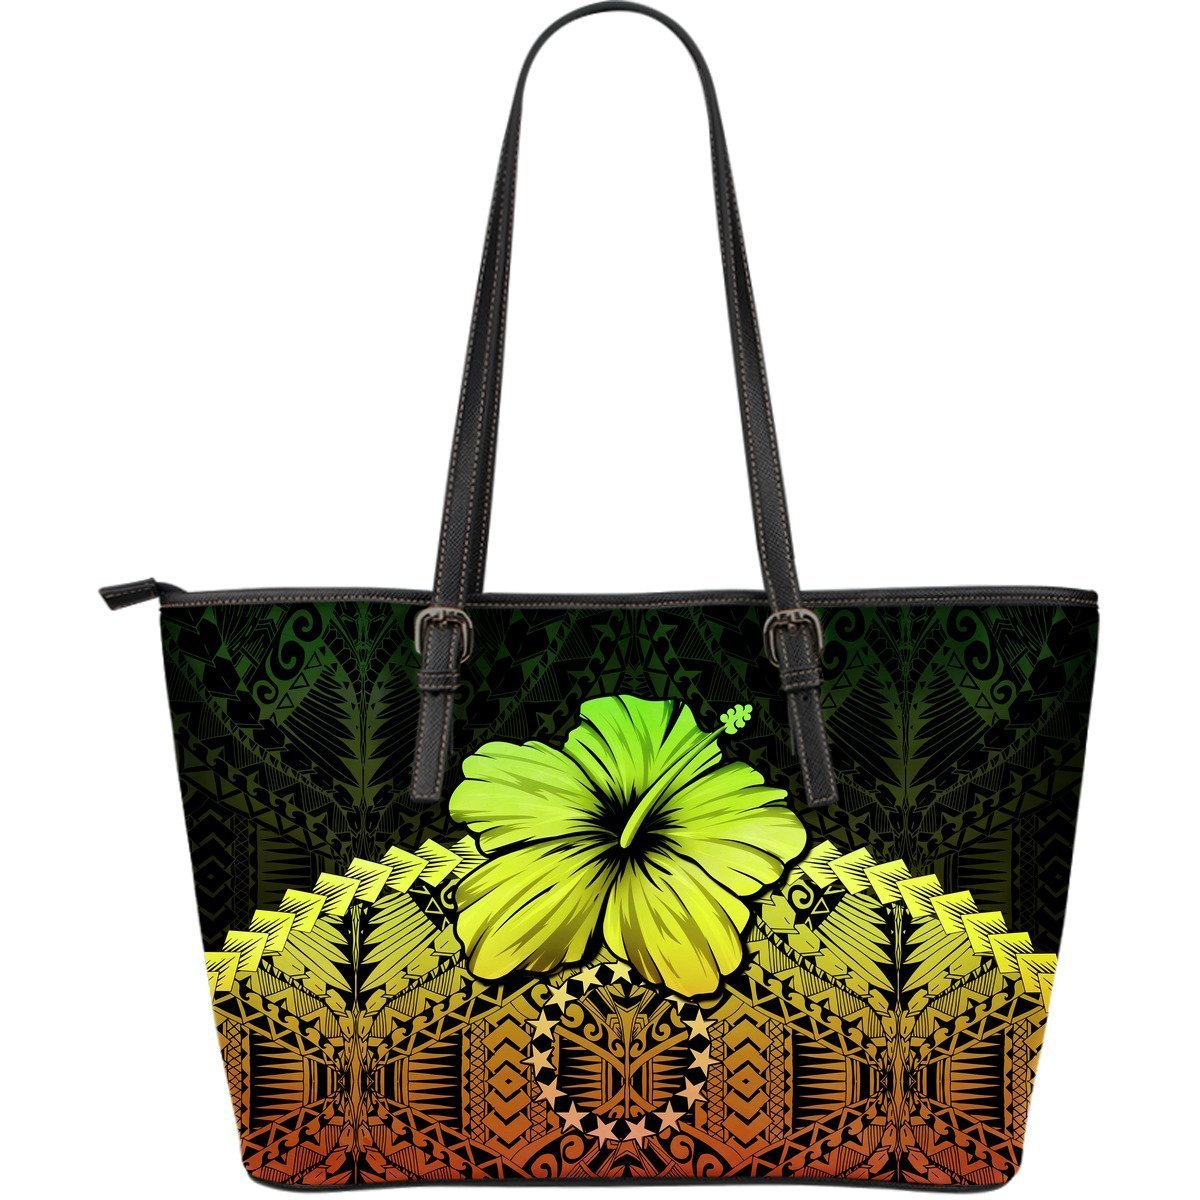 Cook Islands Leather Tote Bag - Hibiscus (Reggae) Reggae - Polynesian Pride